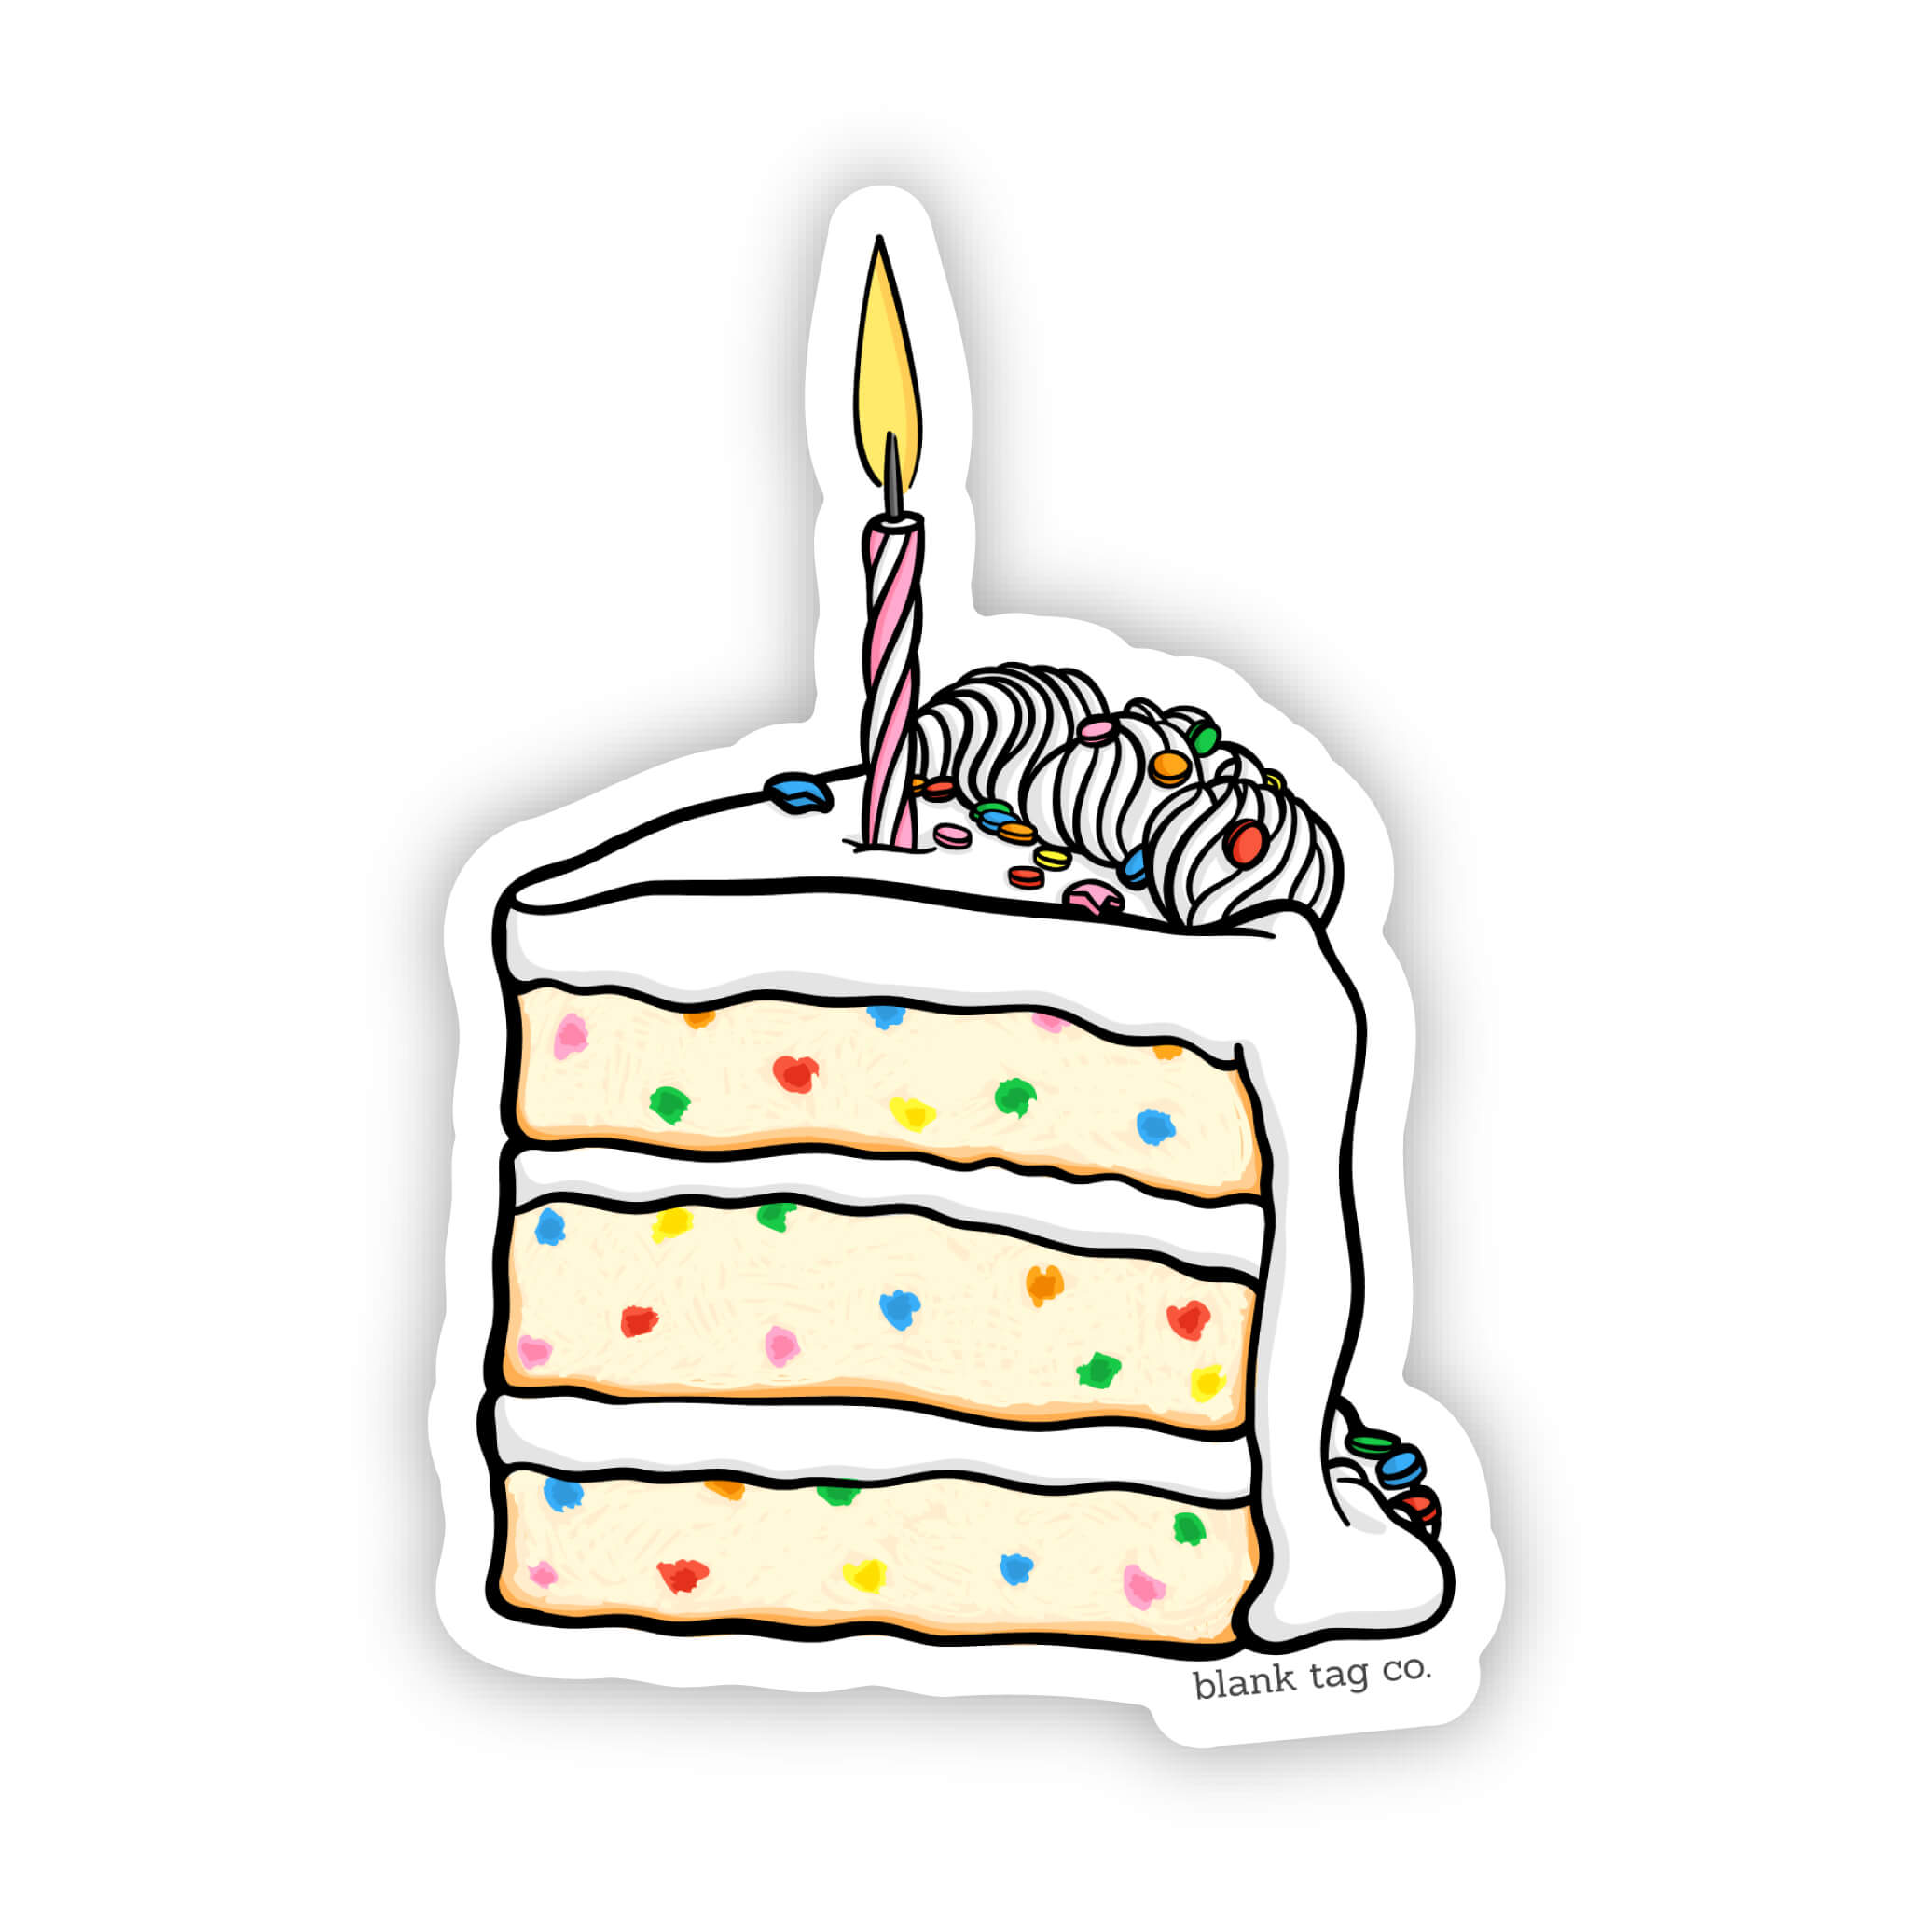 The Slice of Birthday Cake Sticker